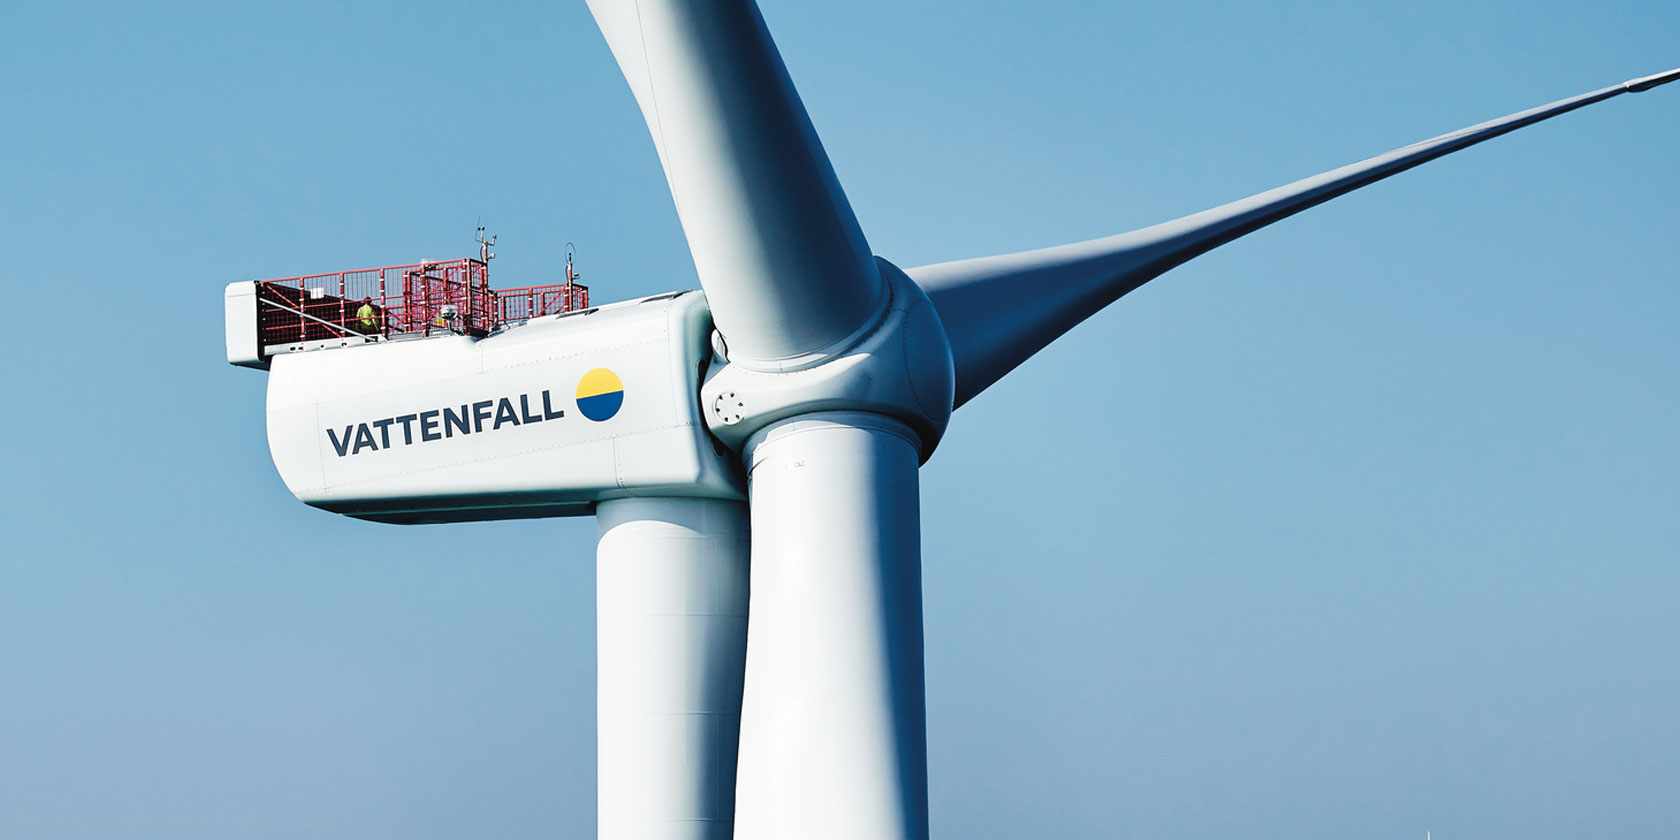 Vattenfall's logo on a wind turbine at Horns Rev